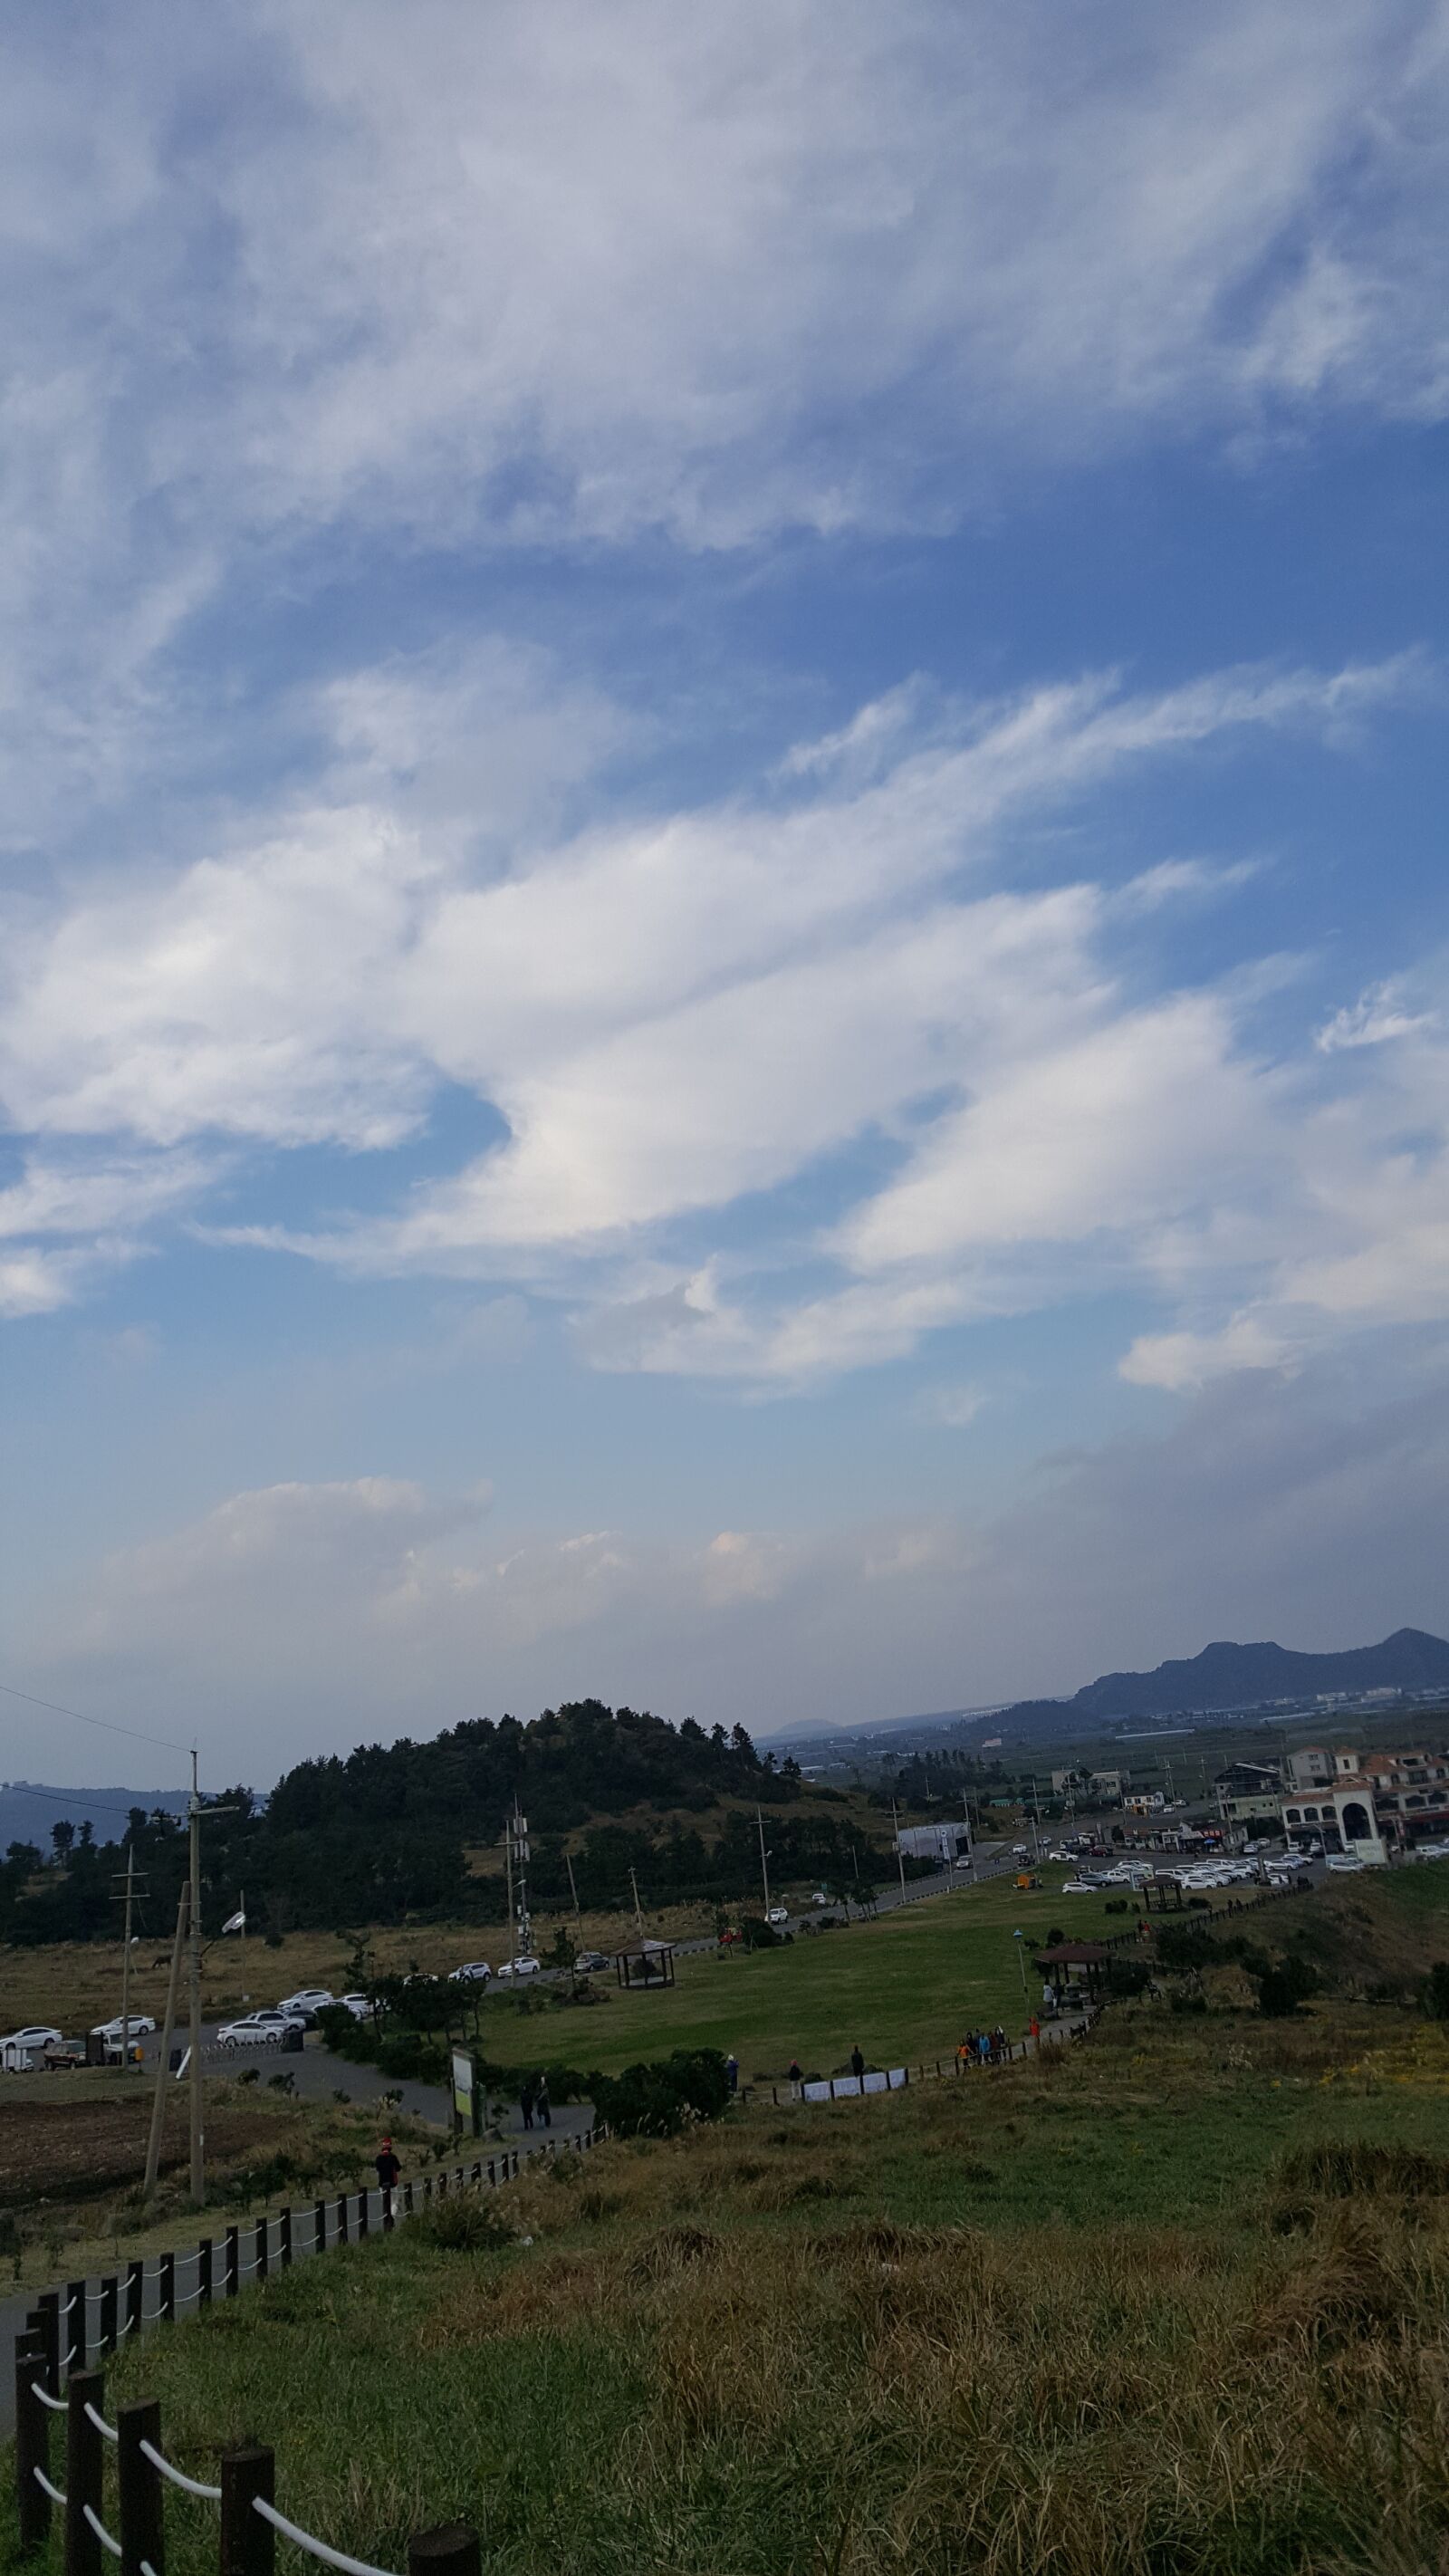 Samsung Galaxy S6 sample photo. Sky, land, nature photography